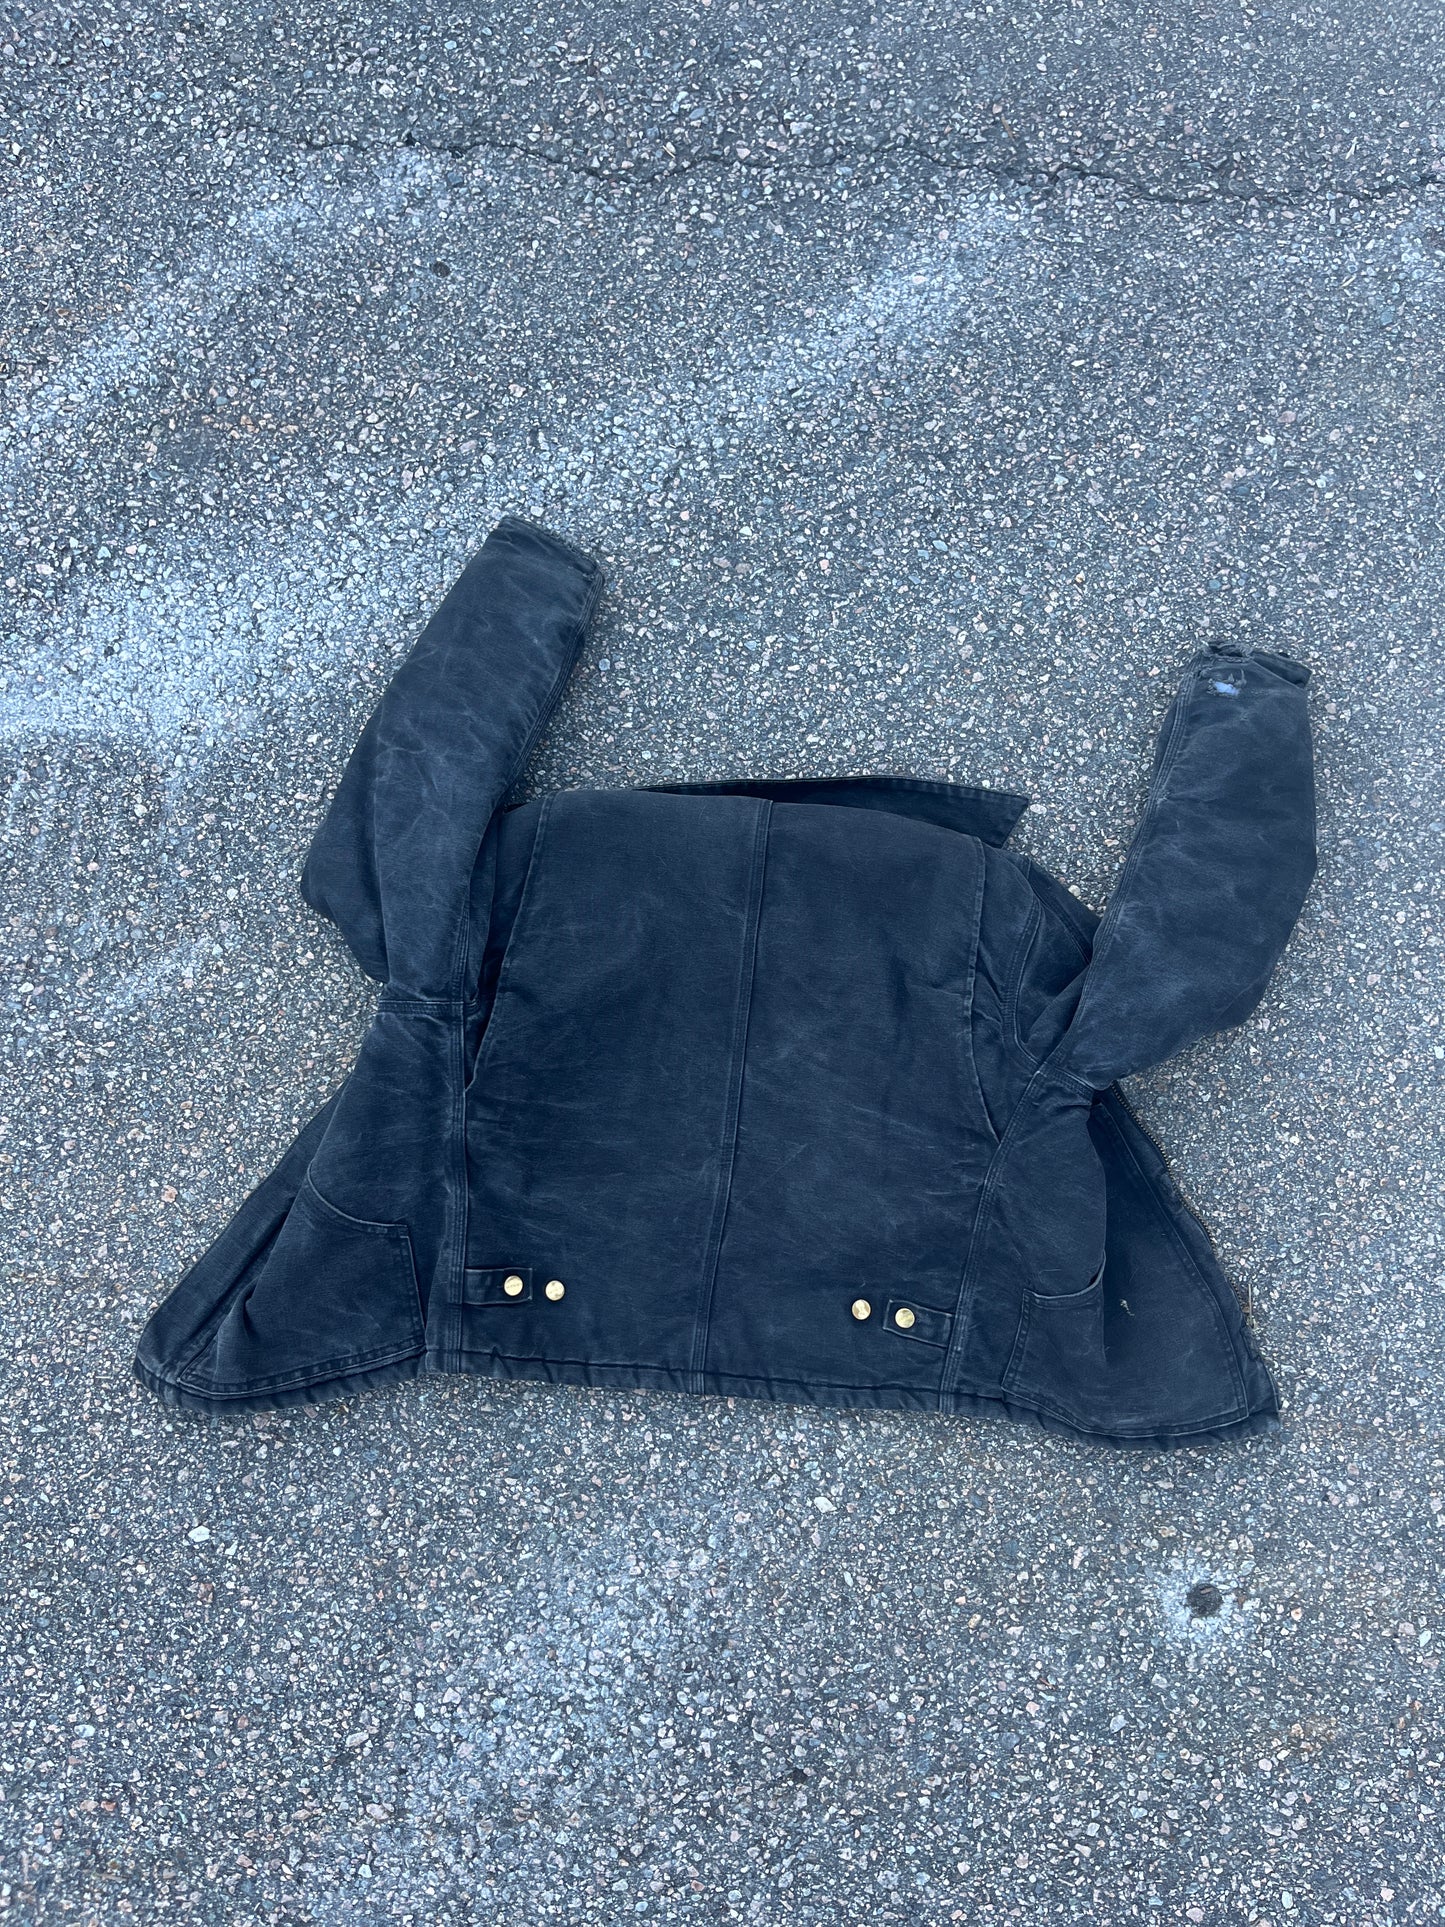 Faded Black Carhartt Arctic Jacket - Fits S-M